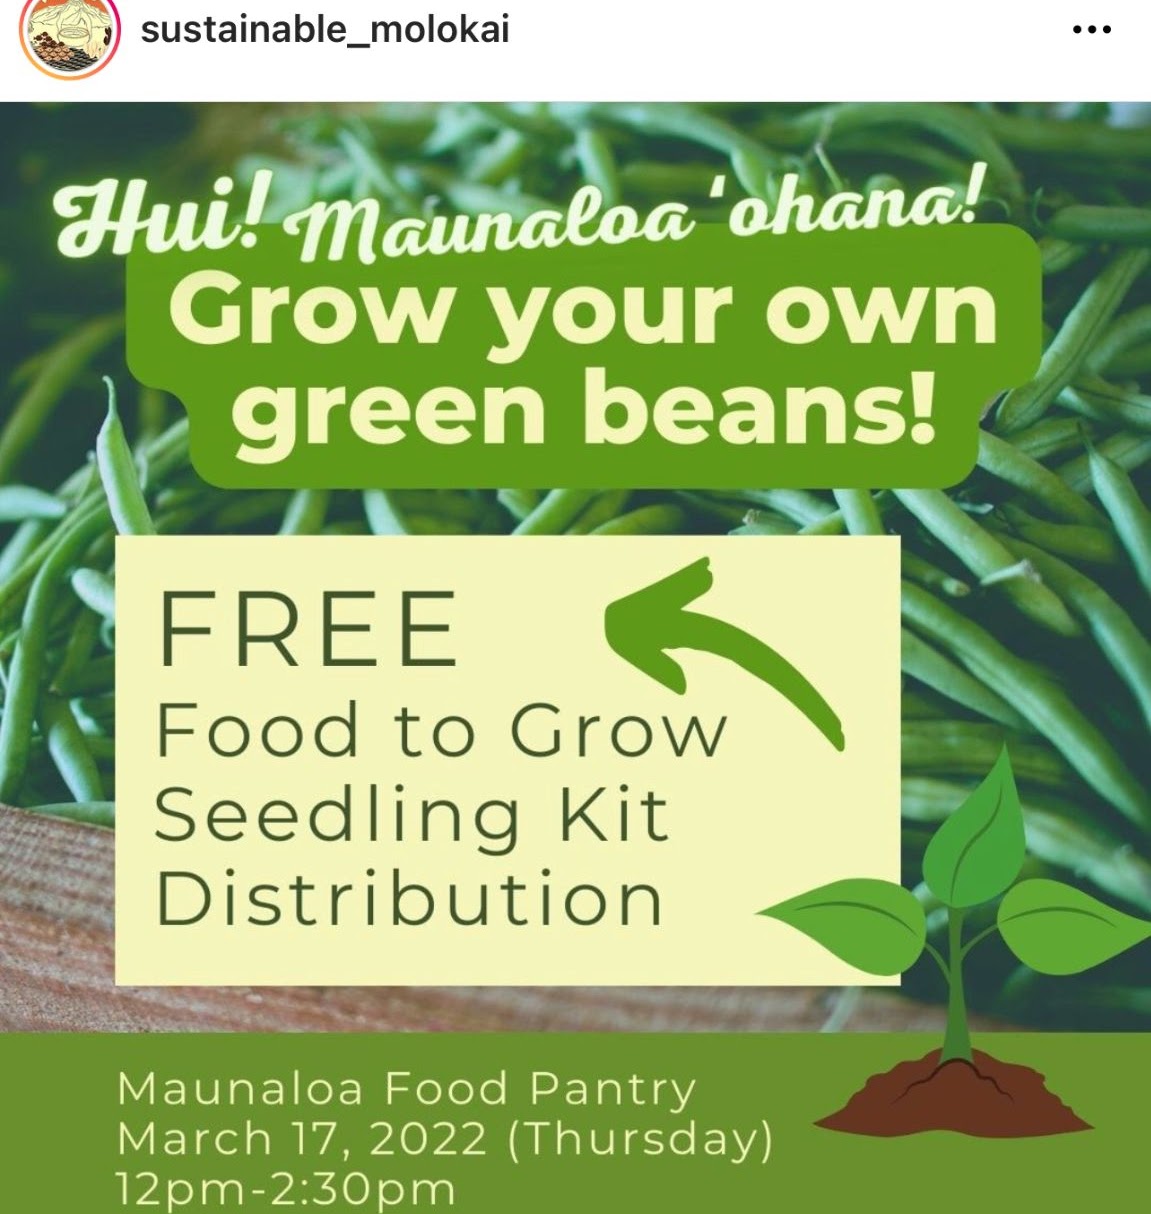 Hui! Maunaloa ohana! Grow your own green beans! Free to Food to Grow Seedling Kit Distribution. Mauna Loa Food Pantry March 17, 2022 (Thursday) 12pm - 2:30pm.